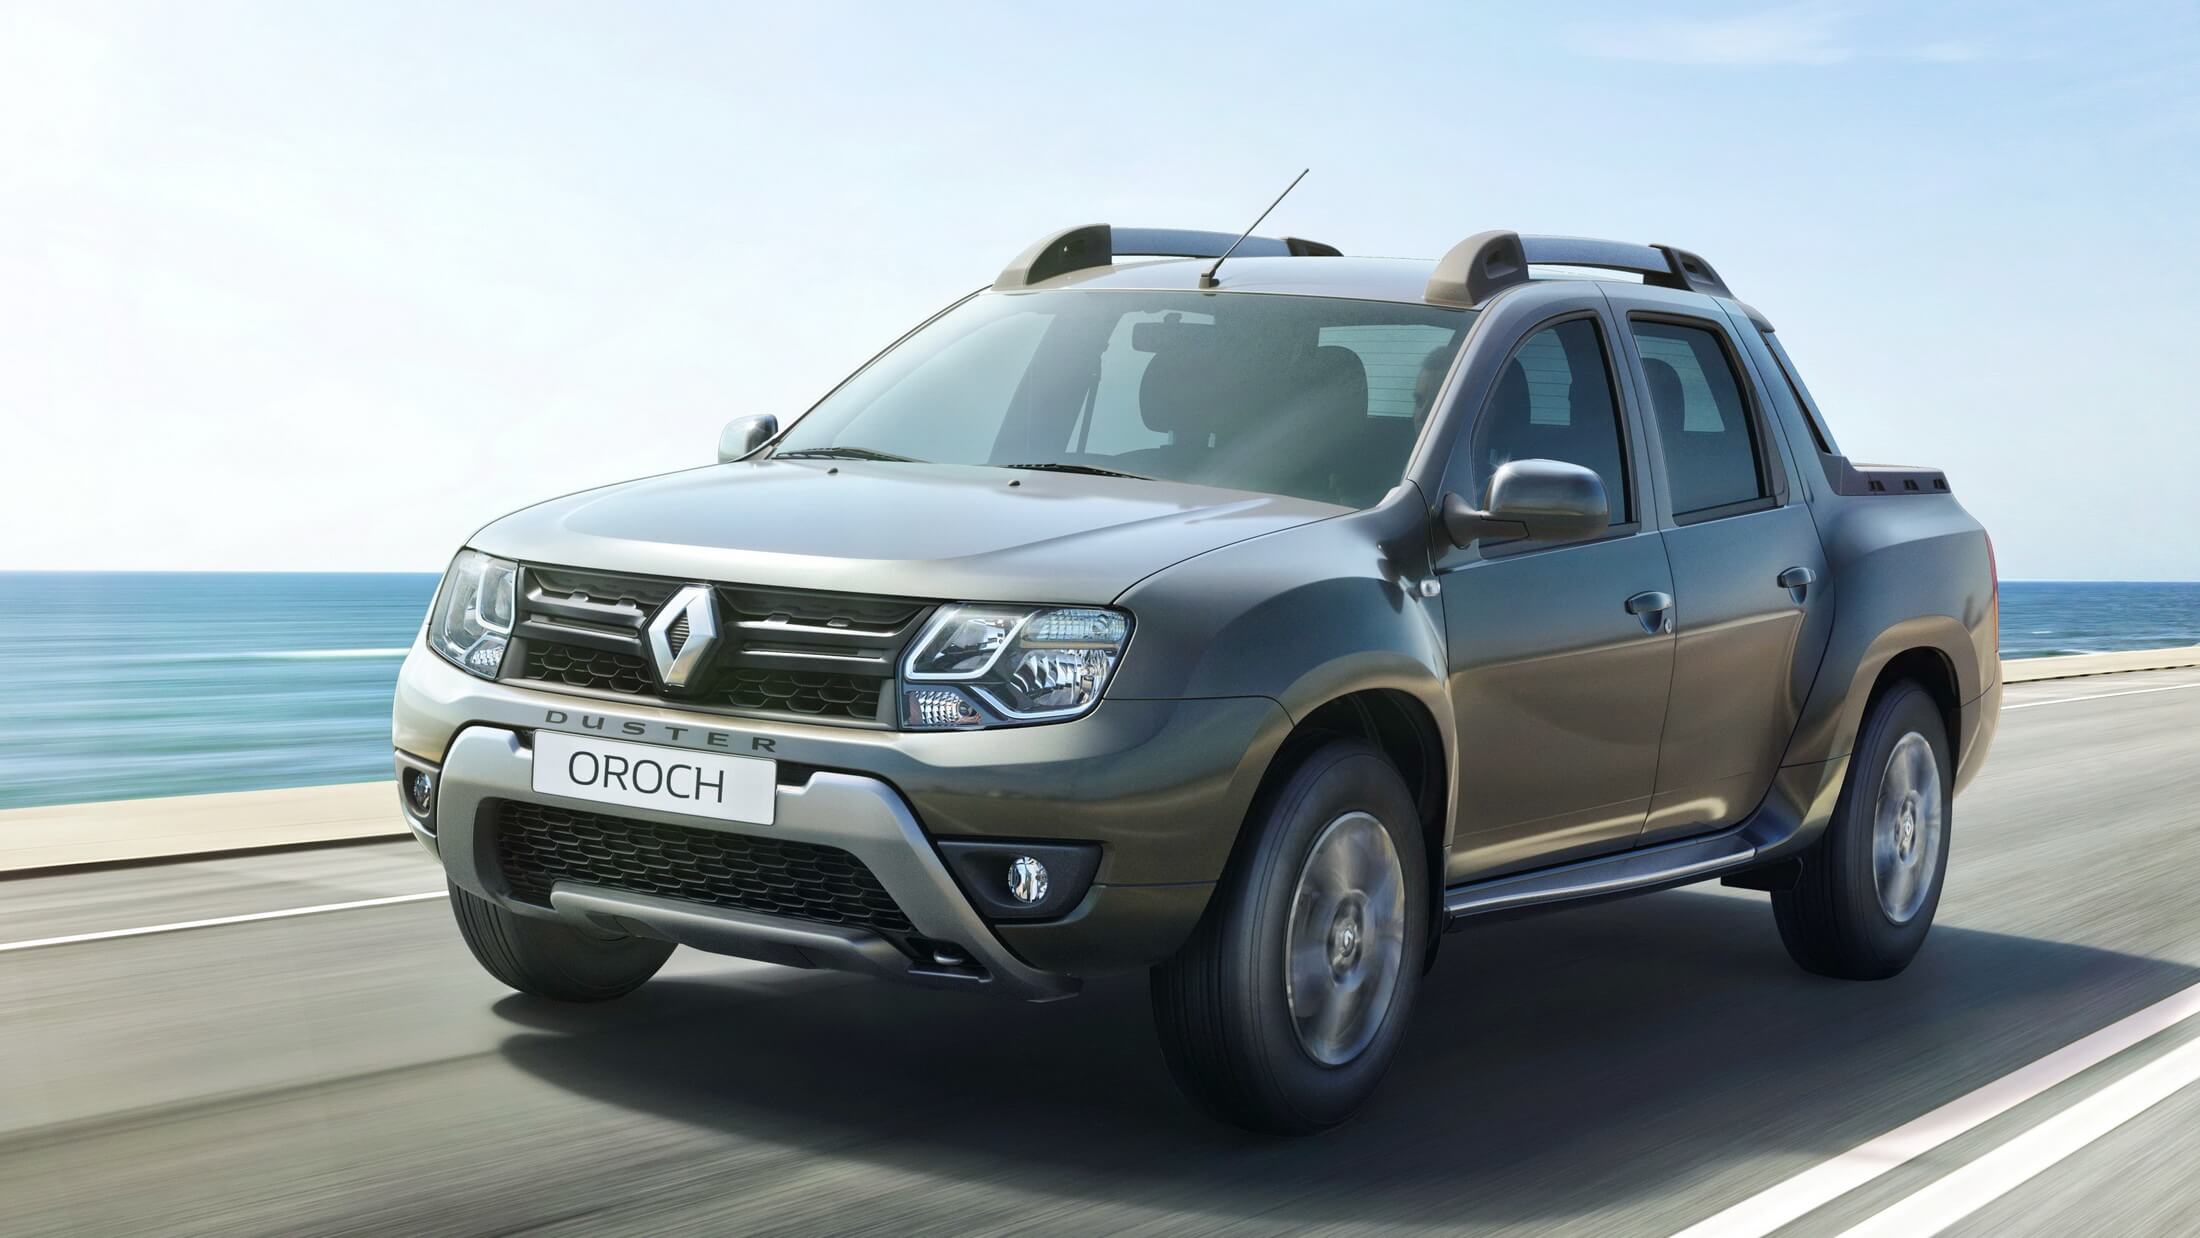 H Dacia ετοιμάζει ένα Duster pick-up και για την Ευρώπη